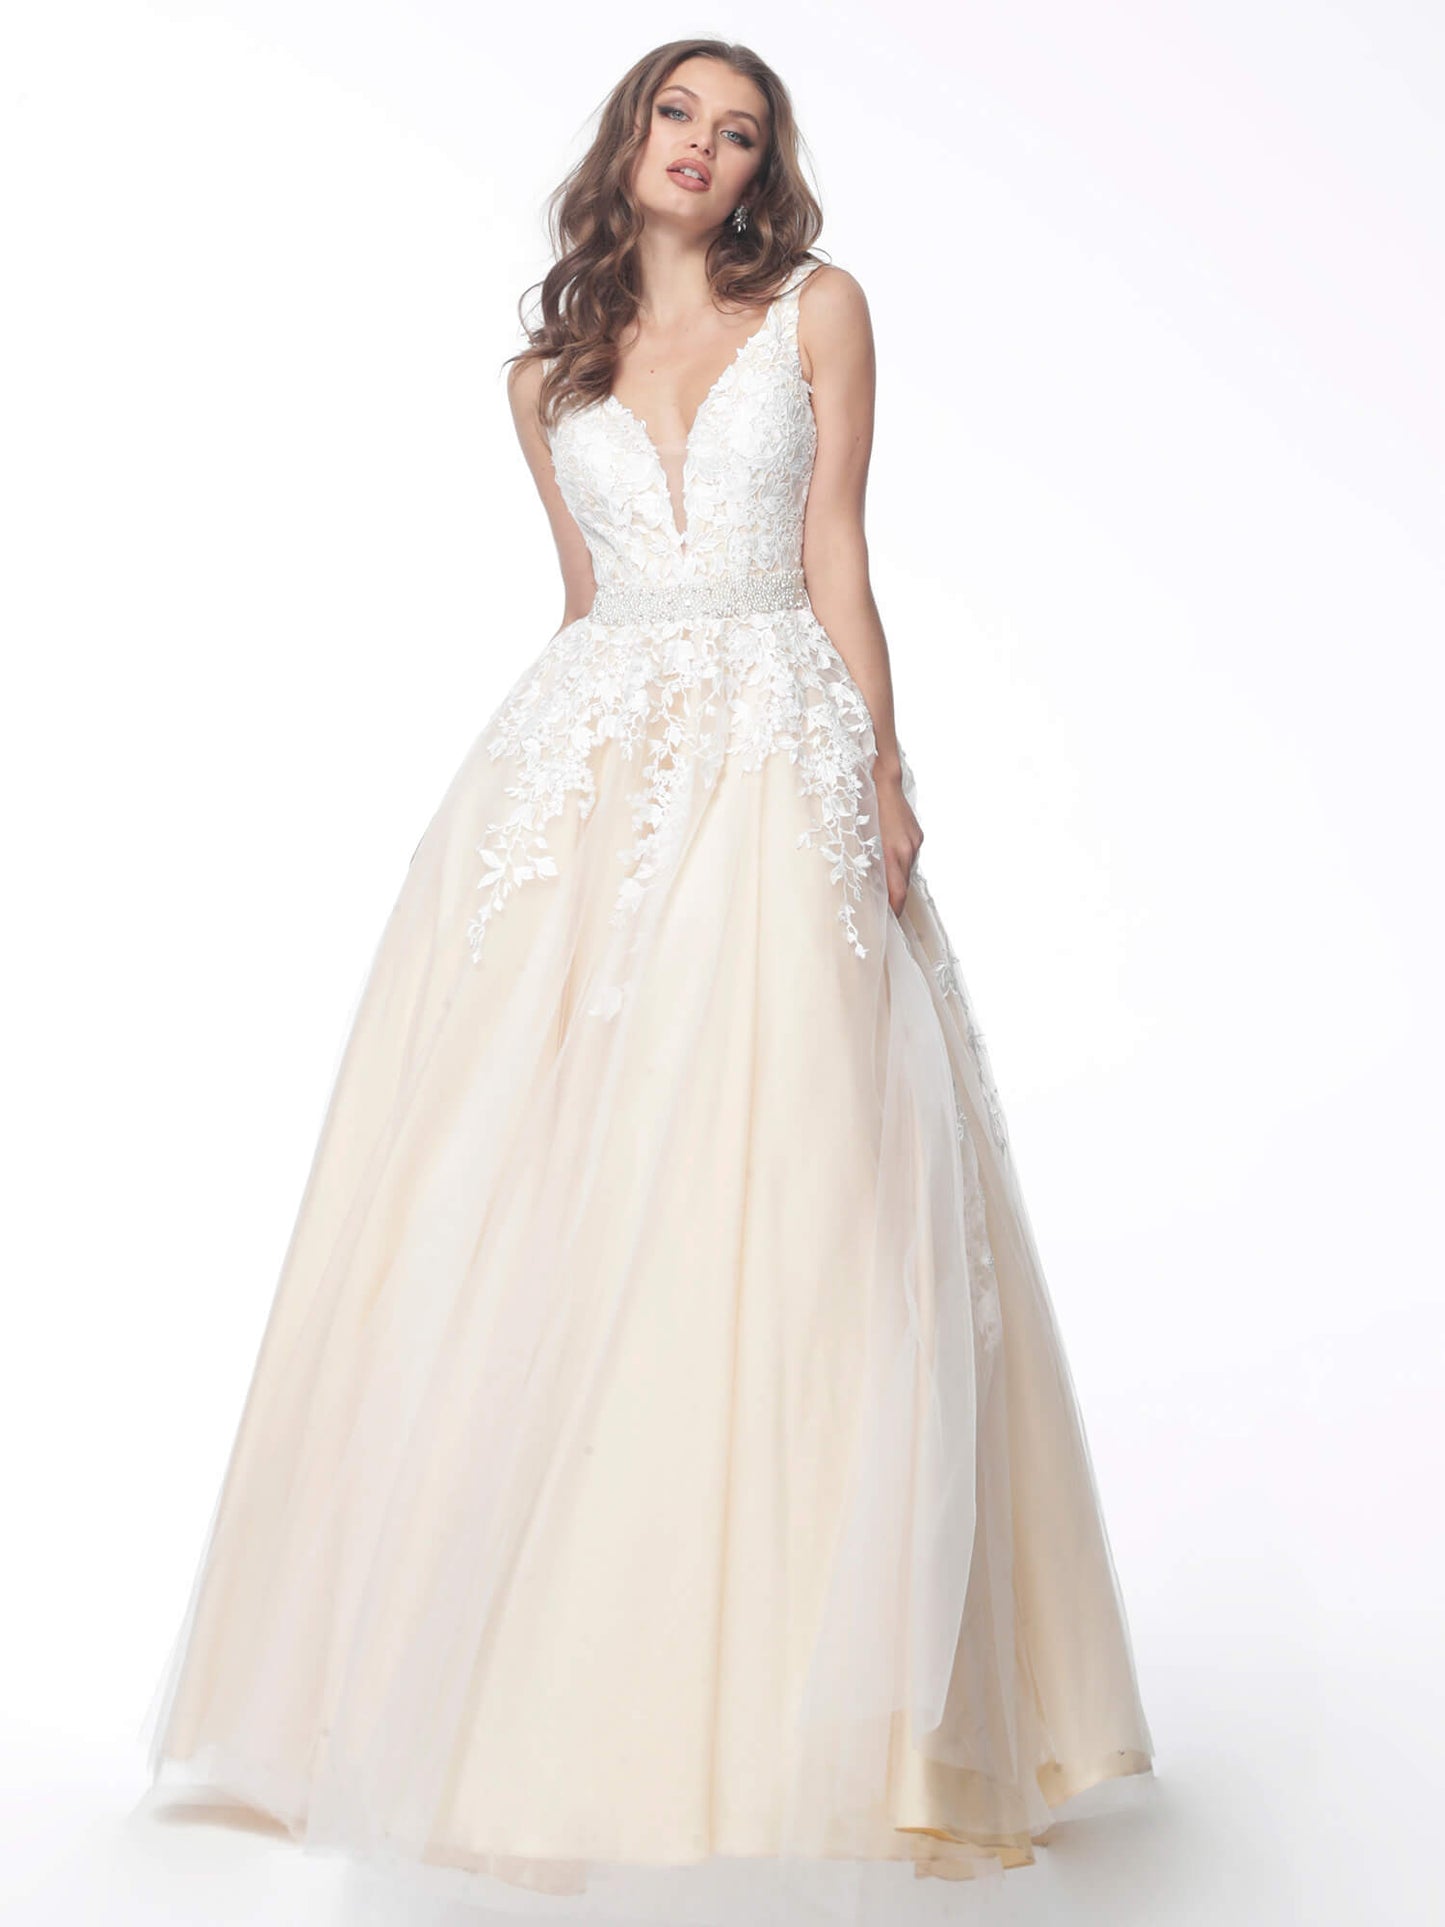 Jovani JVN68258 Size 0, 14 Hot Pink Long A Line Lace Prom Ballgown Dress Formal Plunging Neckline